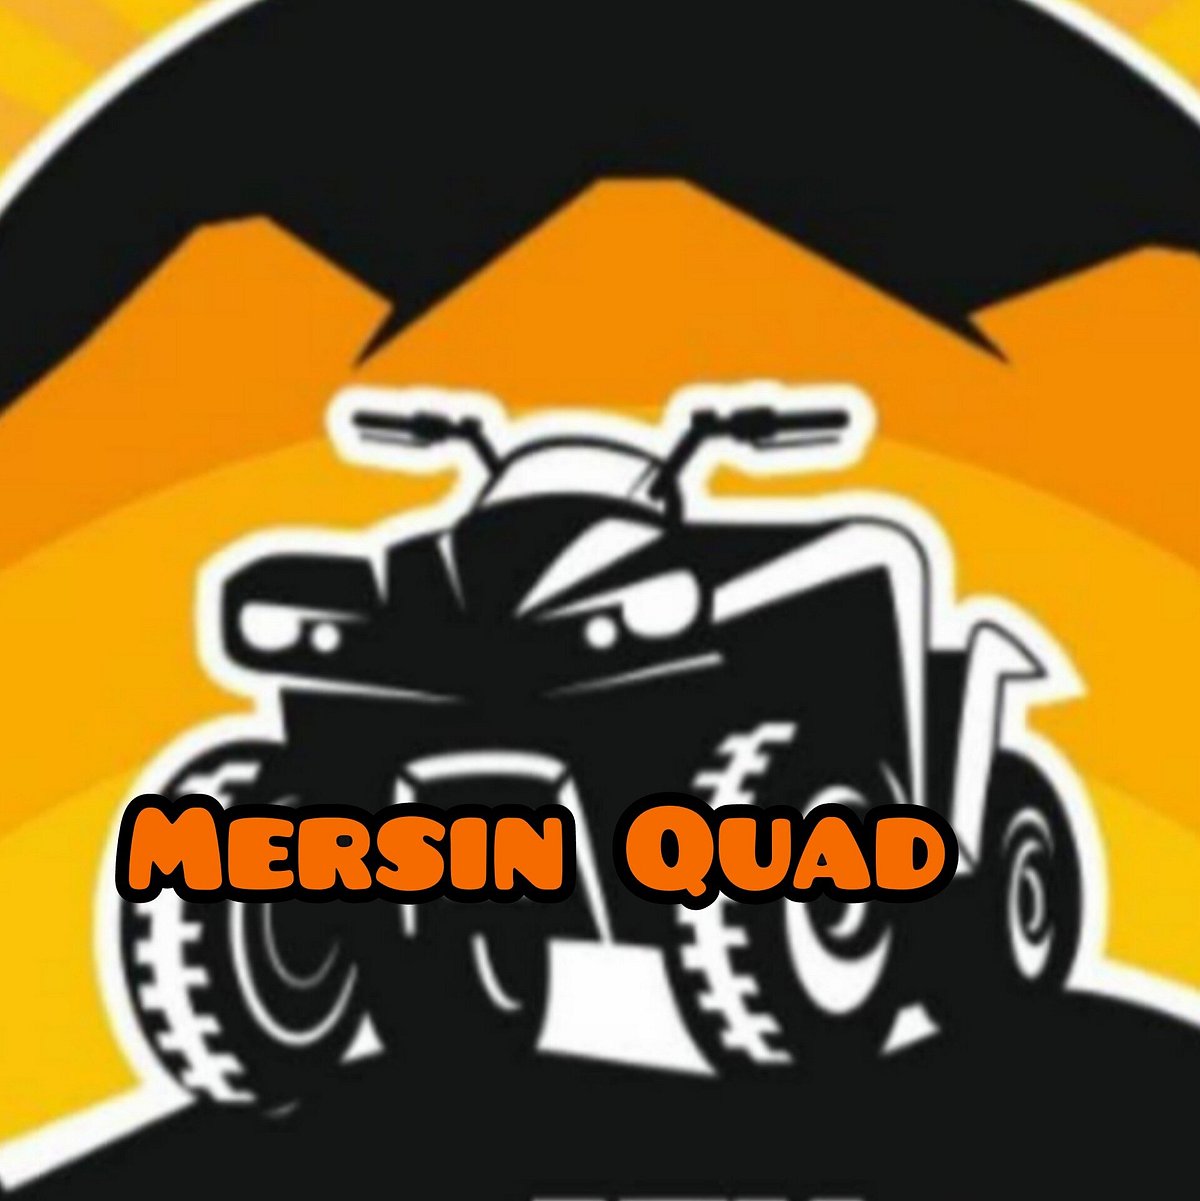 Mersin Quad ATV Safari Tour (Türkiye): Address - Tripadvisor